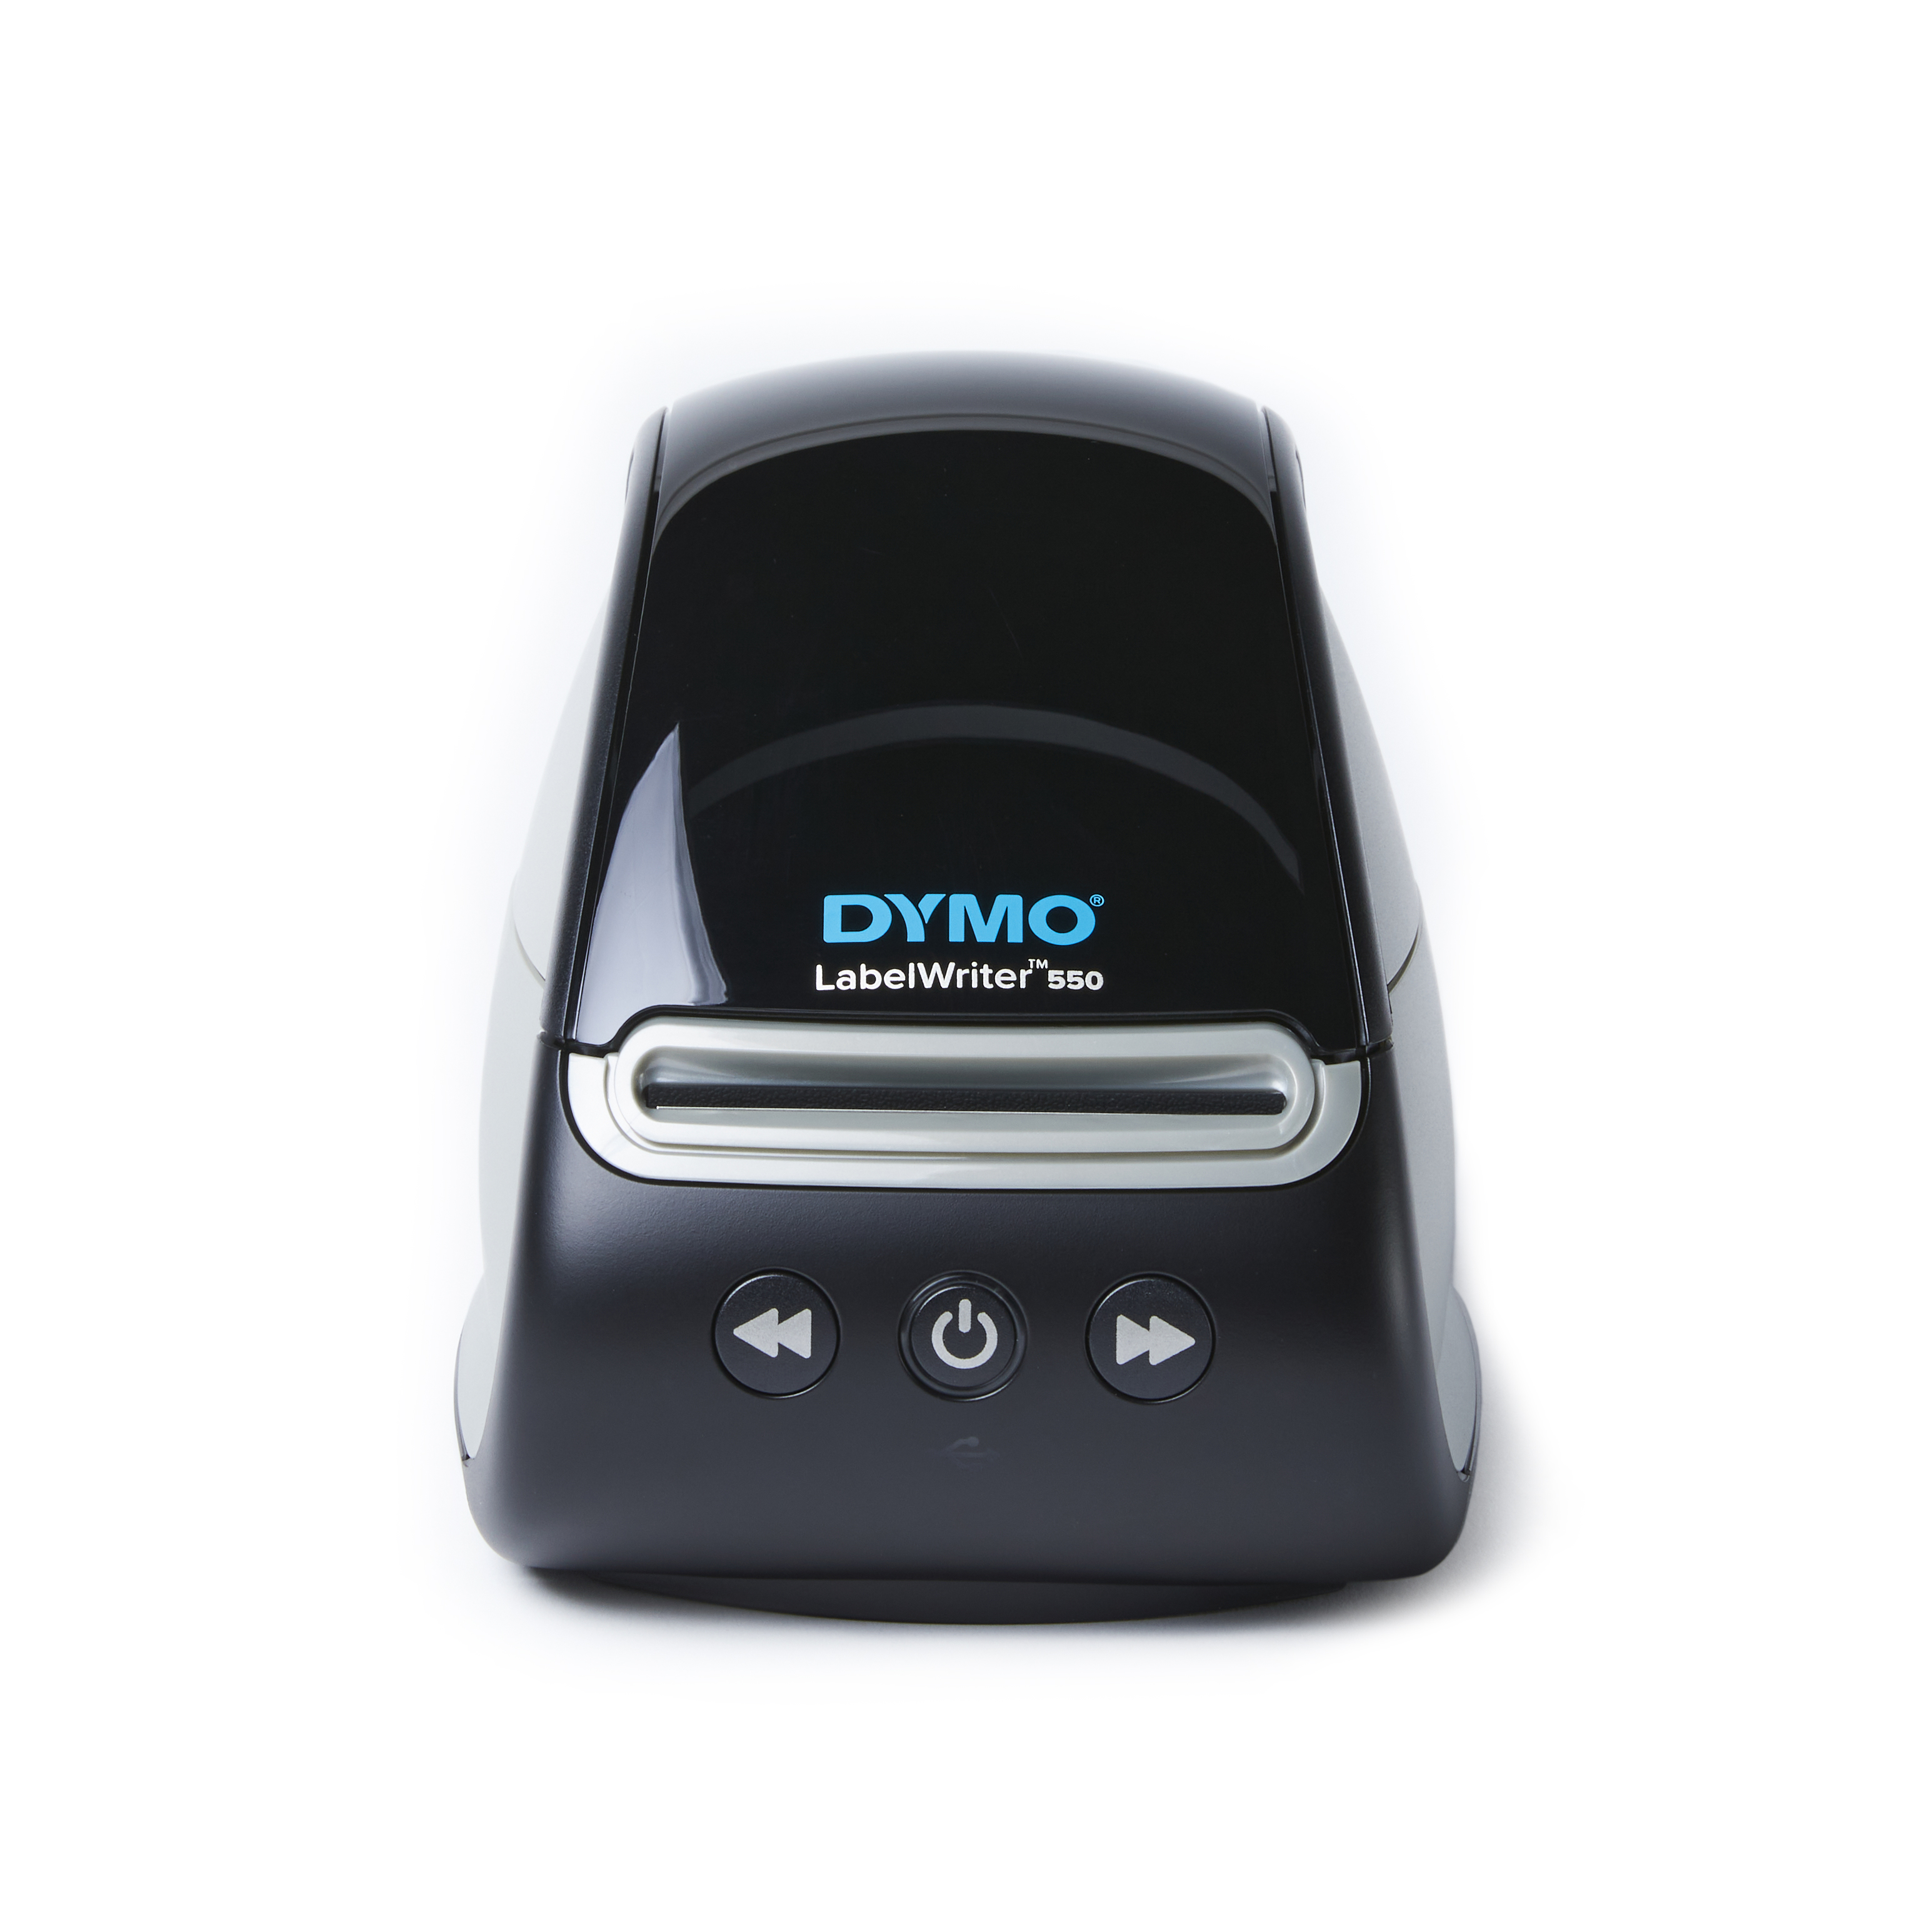 Dymo_550_printer.jpg